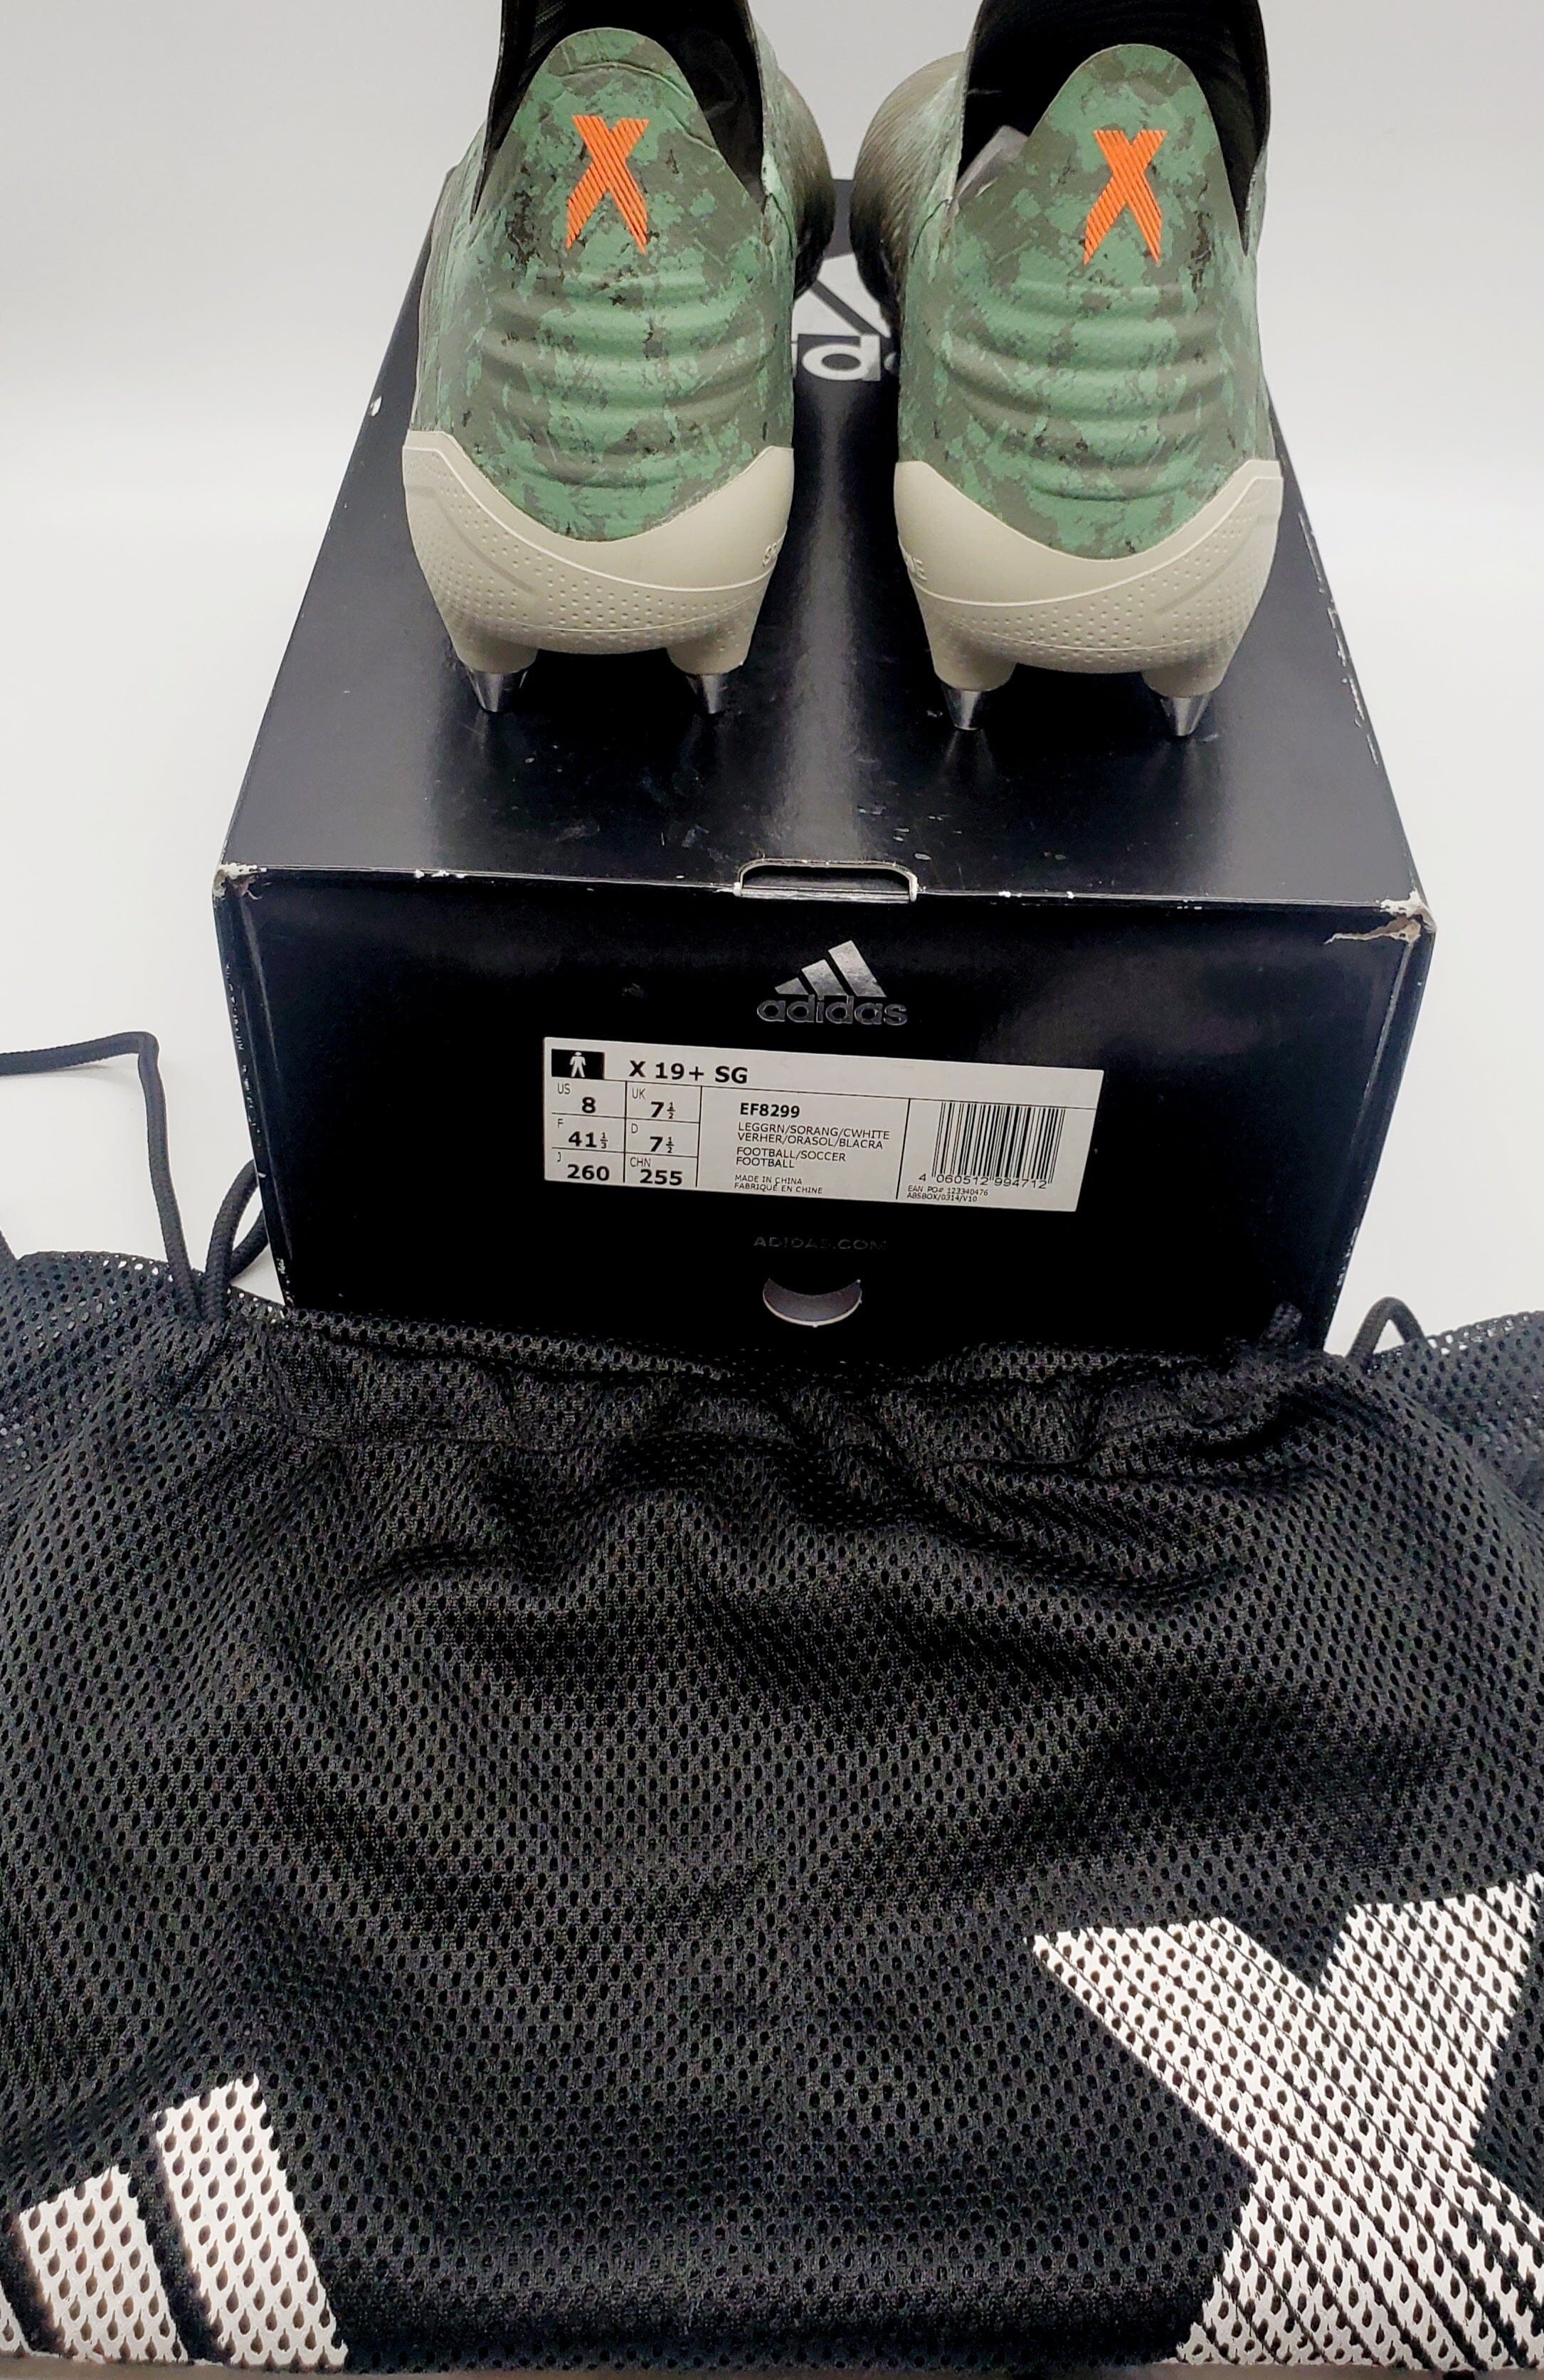 Buy Adidas X 19 + SG at Classic Football Boots